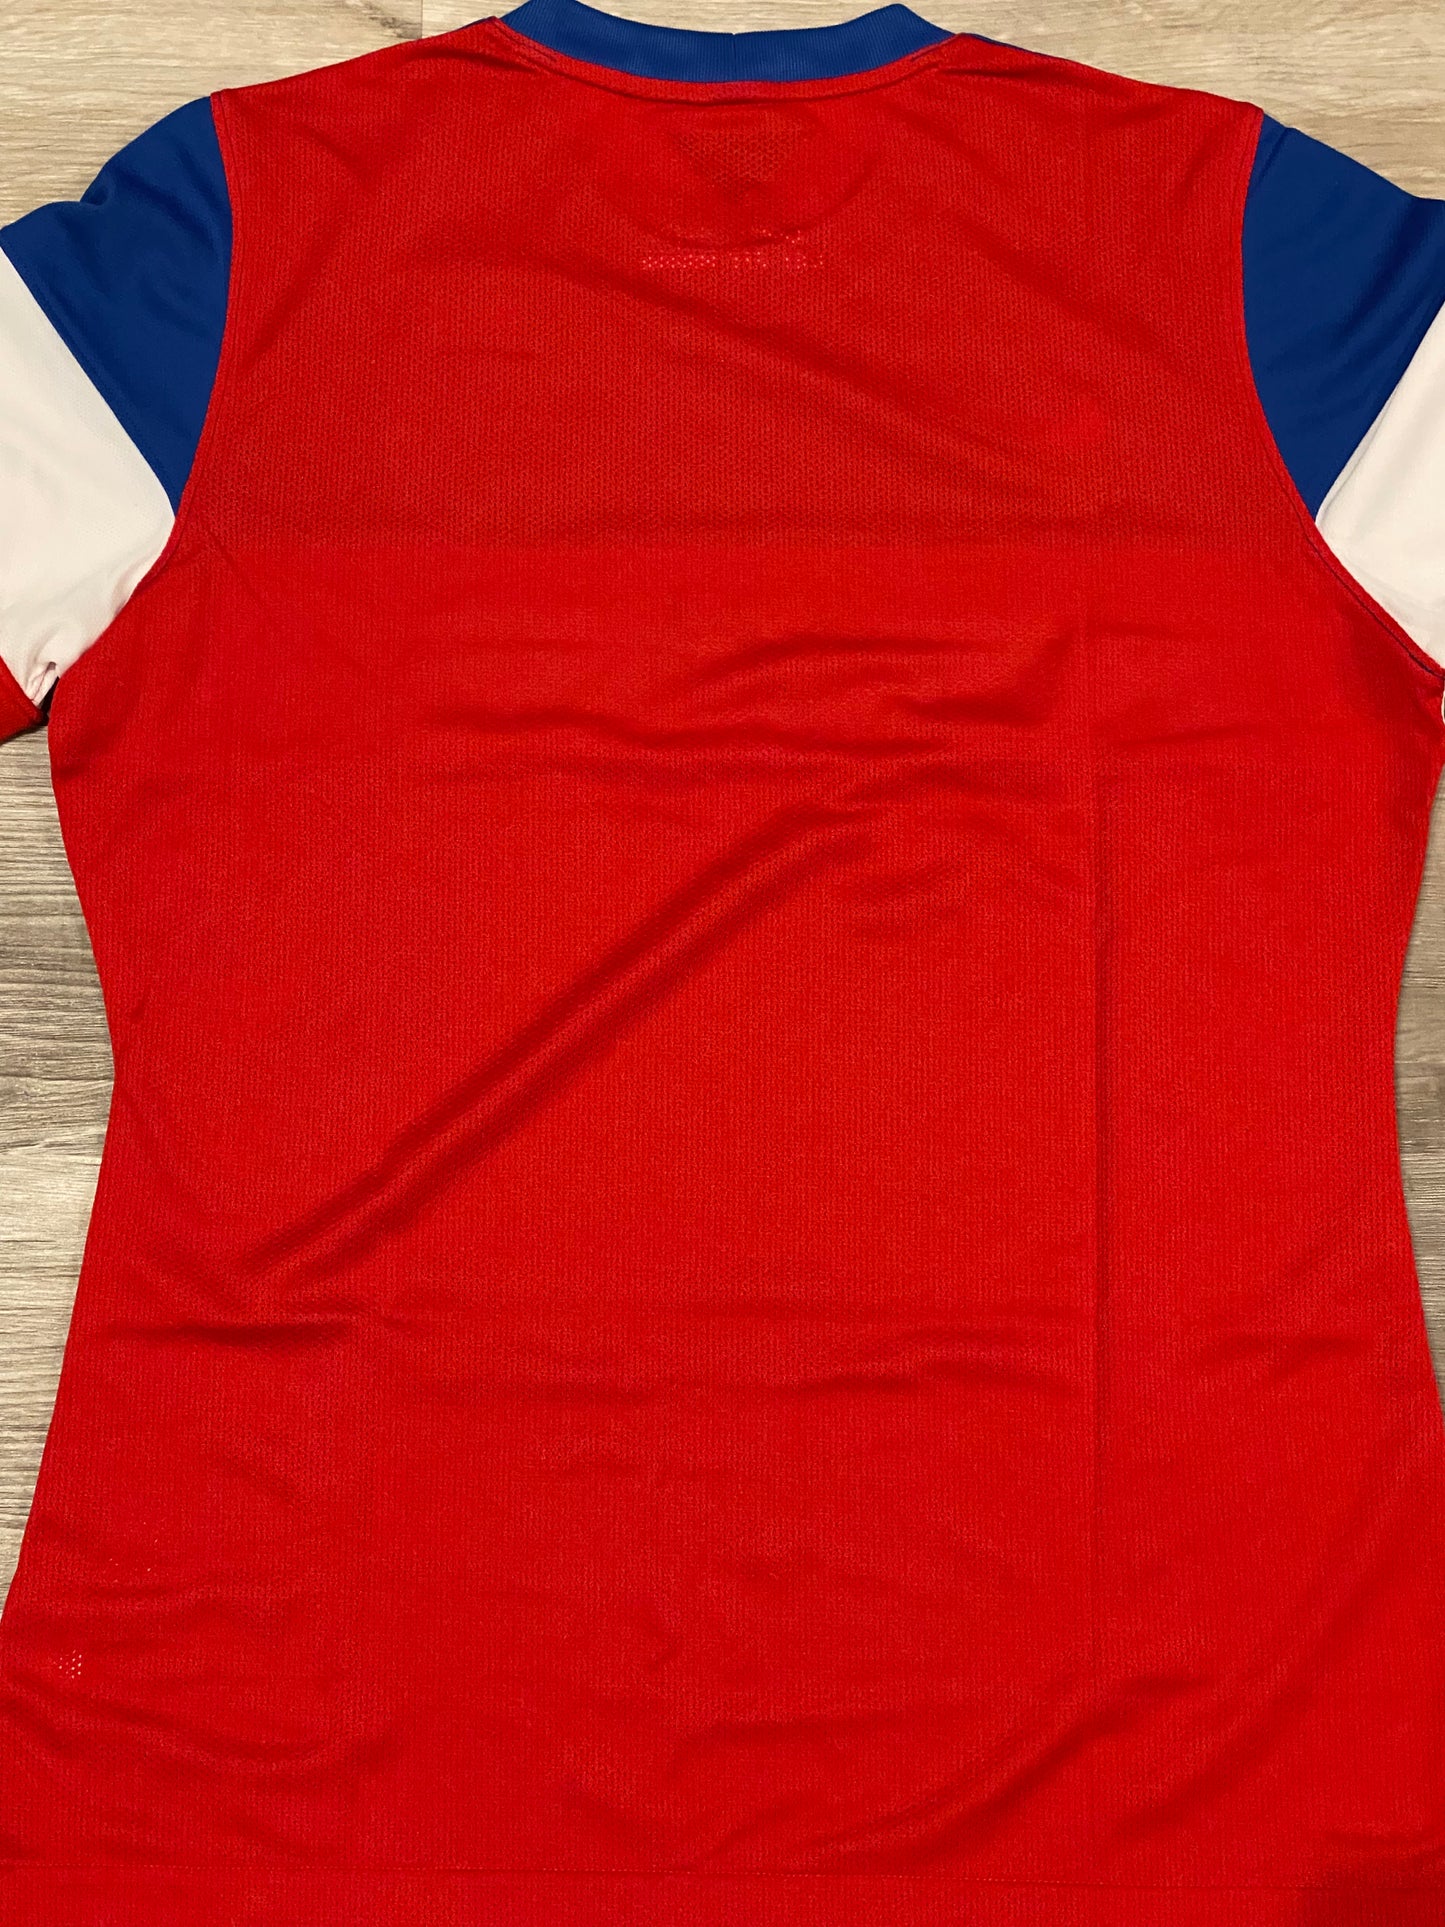 Carli Lloyd signed authentic jersey (PSA COA)